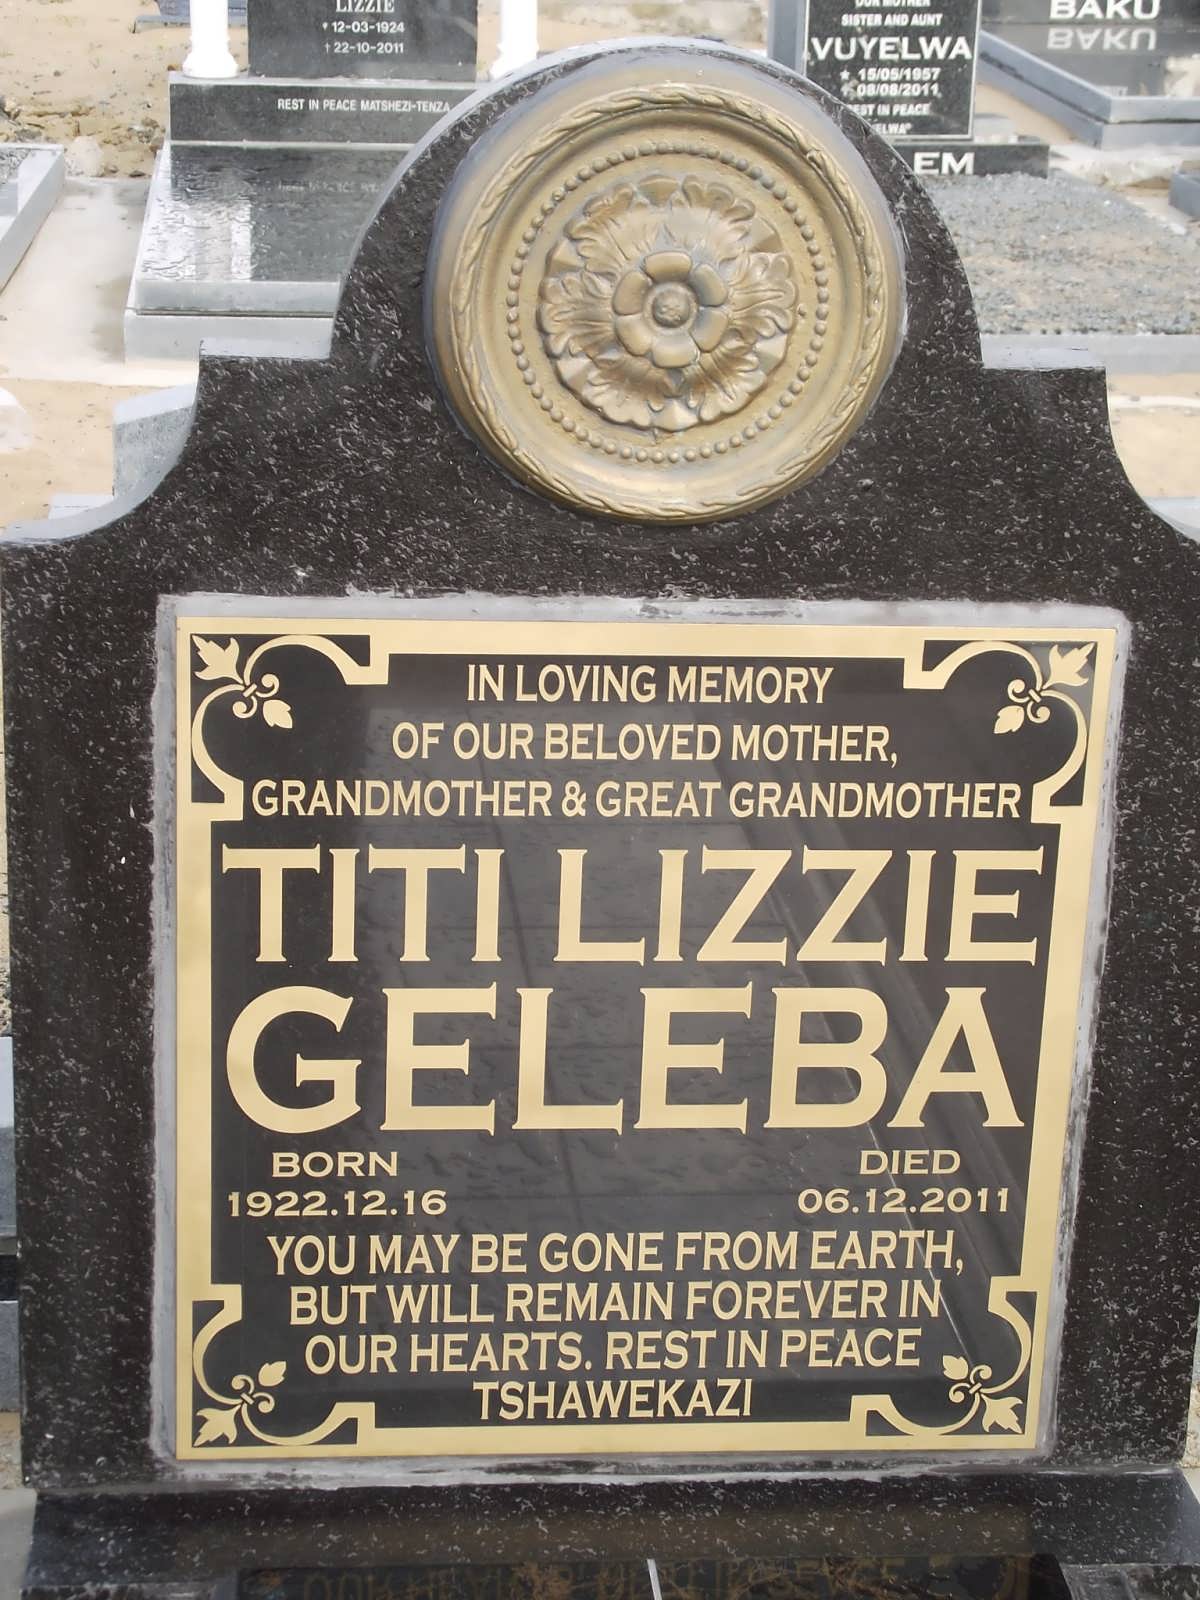 GELEBA Titi Lizzie 1922-2011